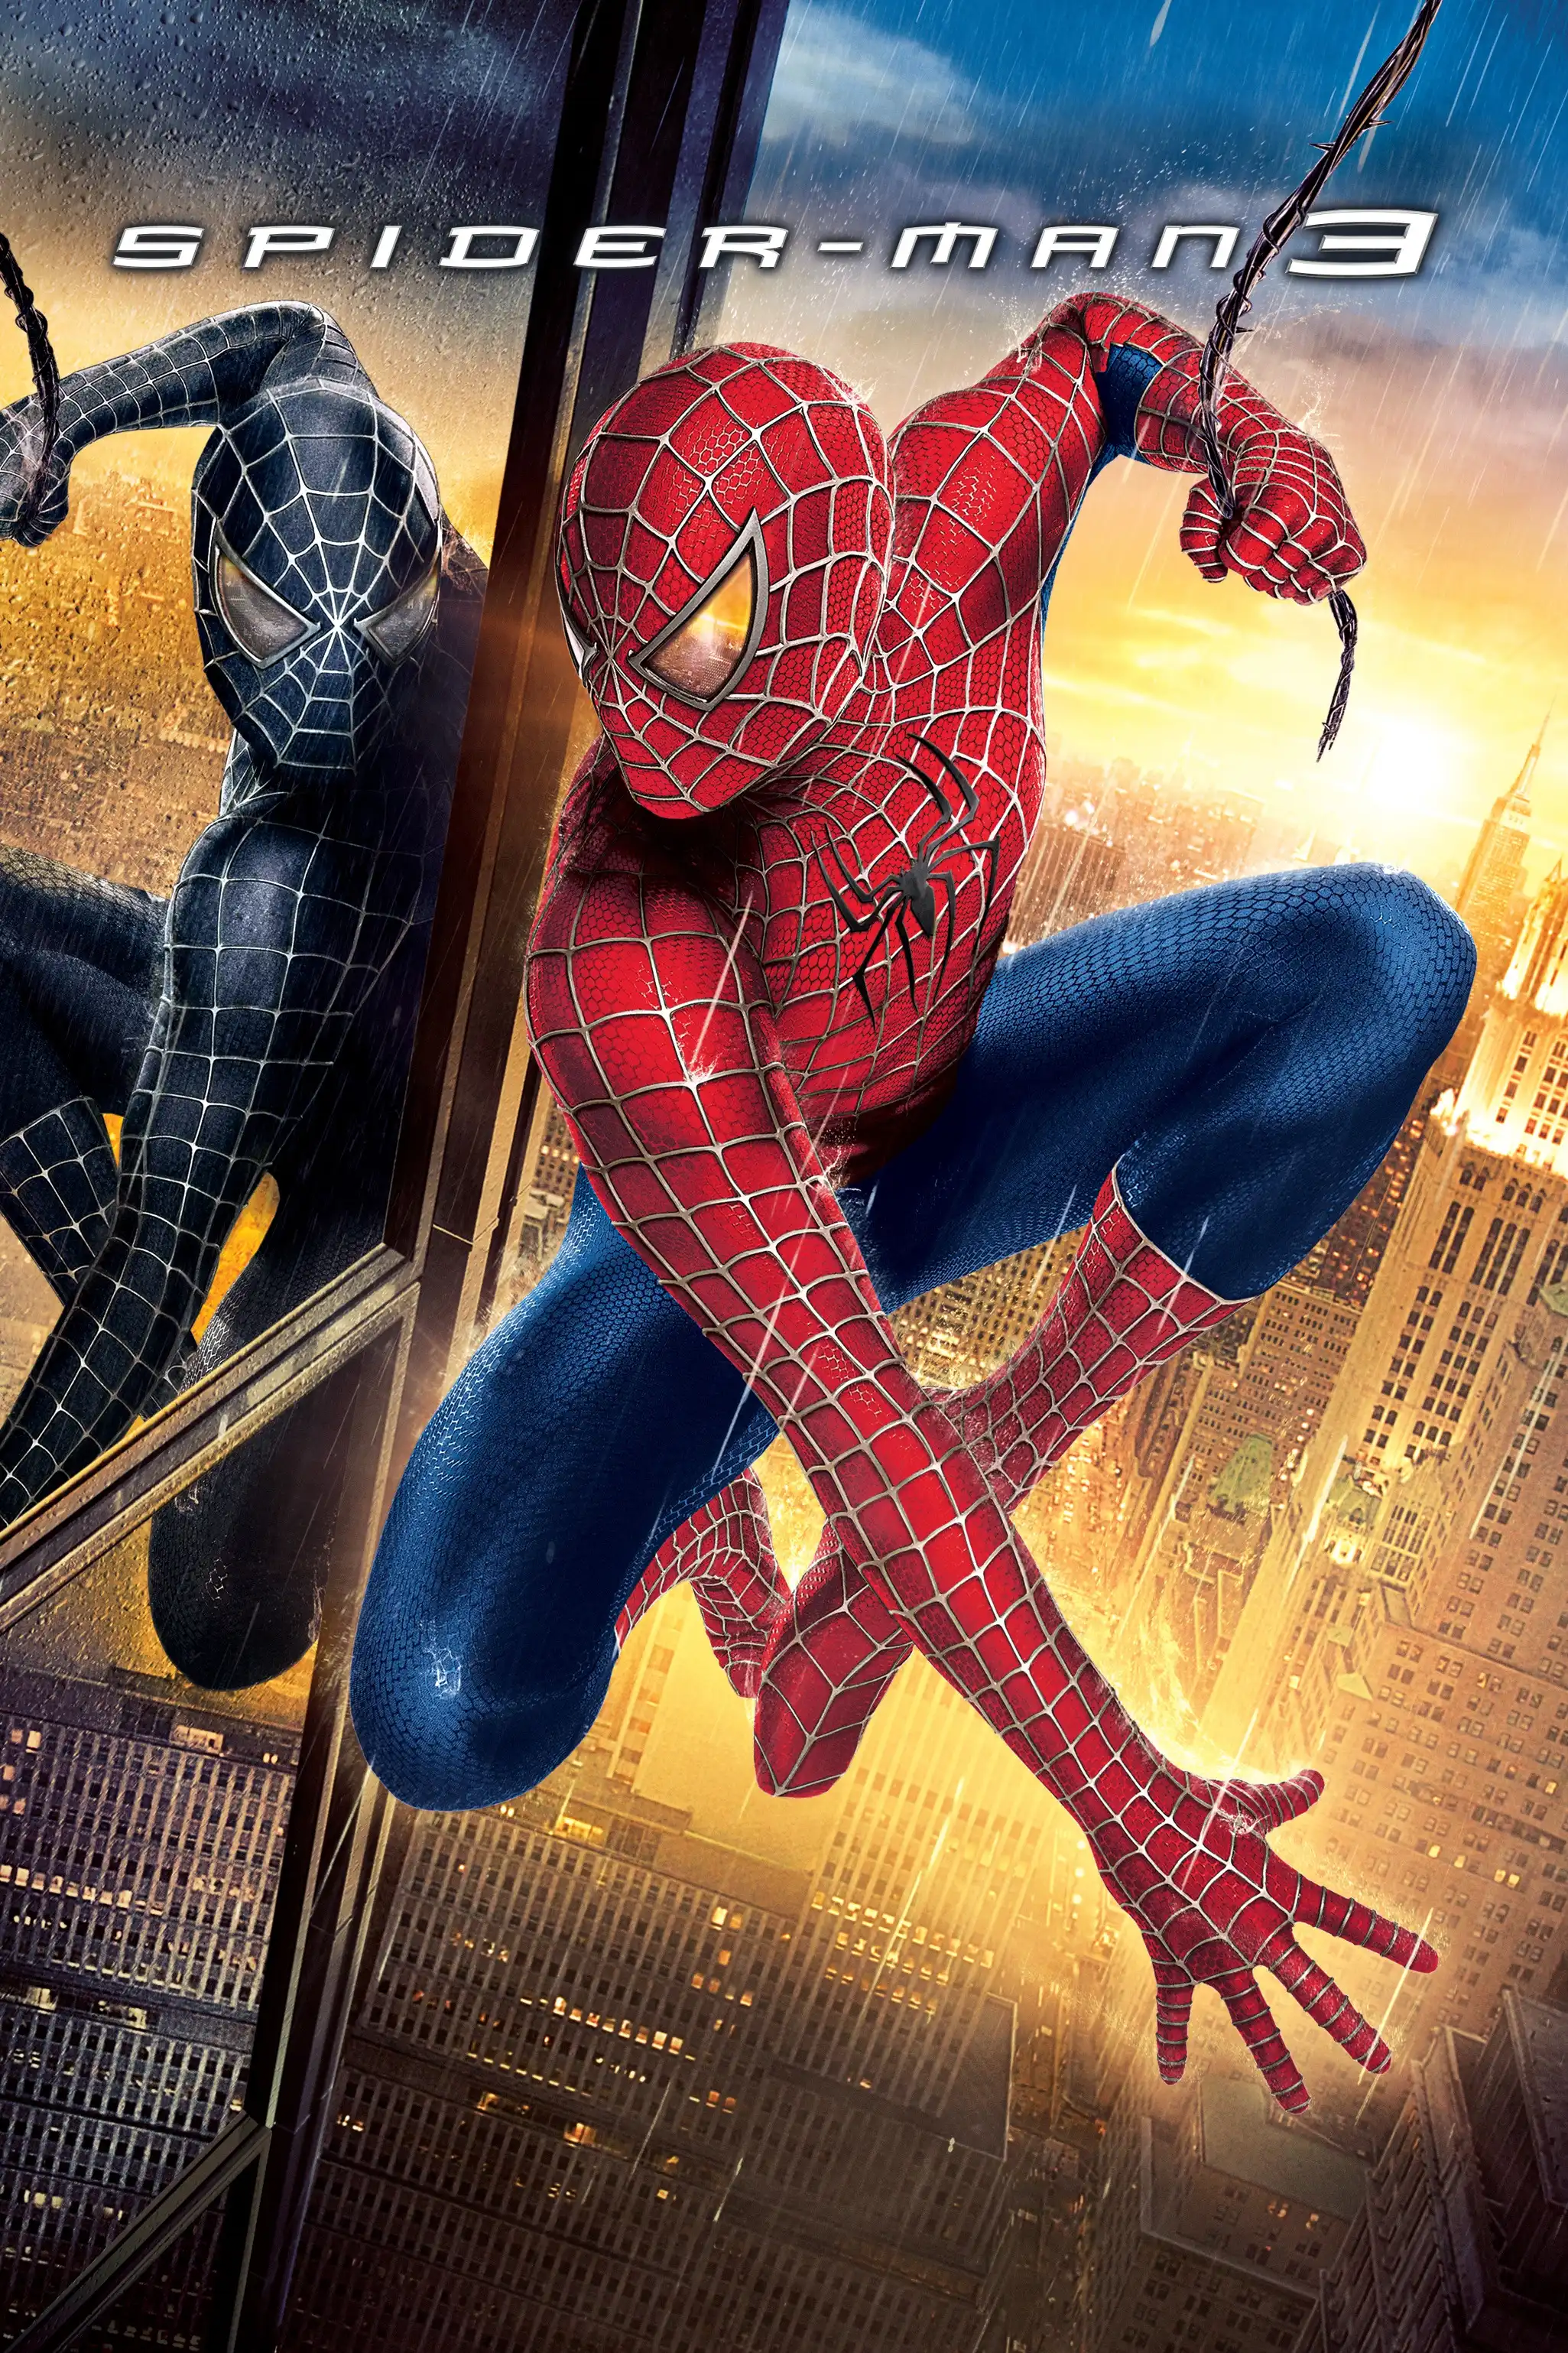 Poster de la Película o Serie: Spider-Man 3